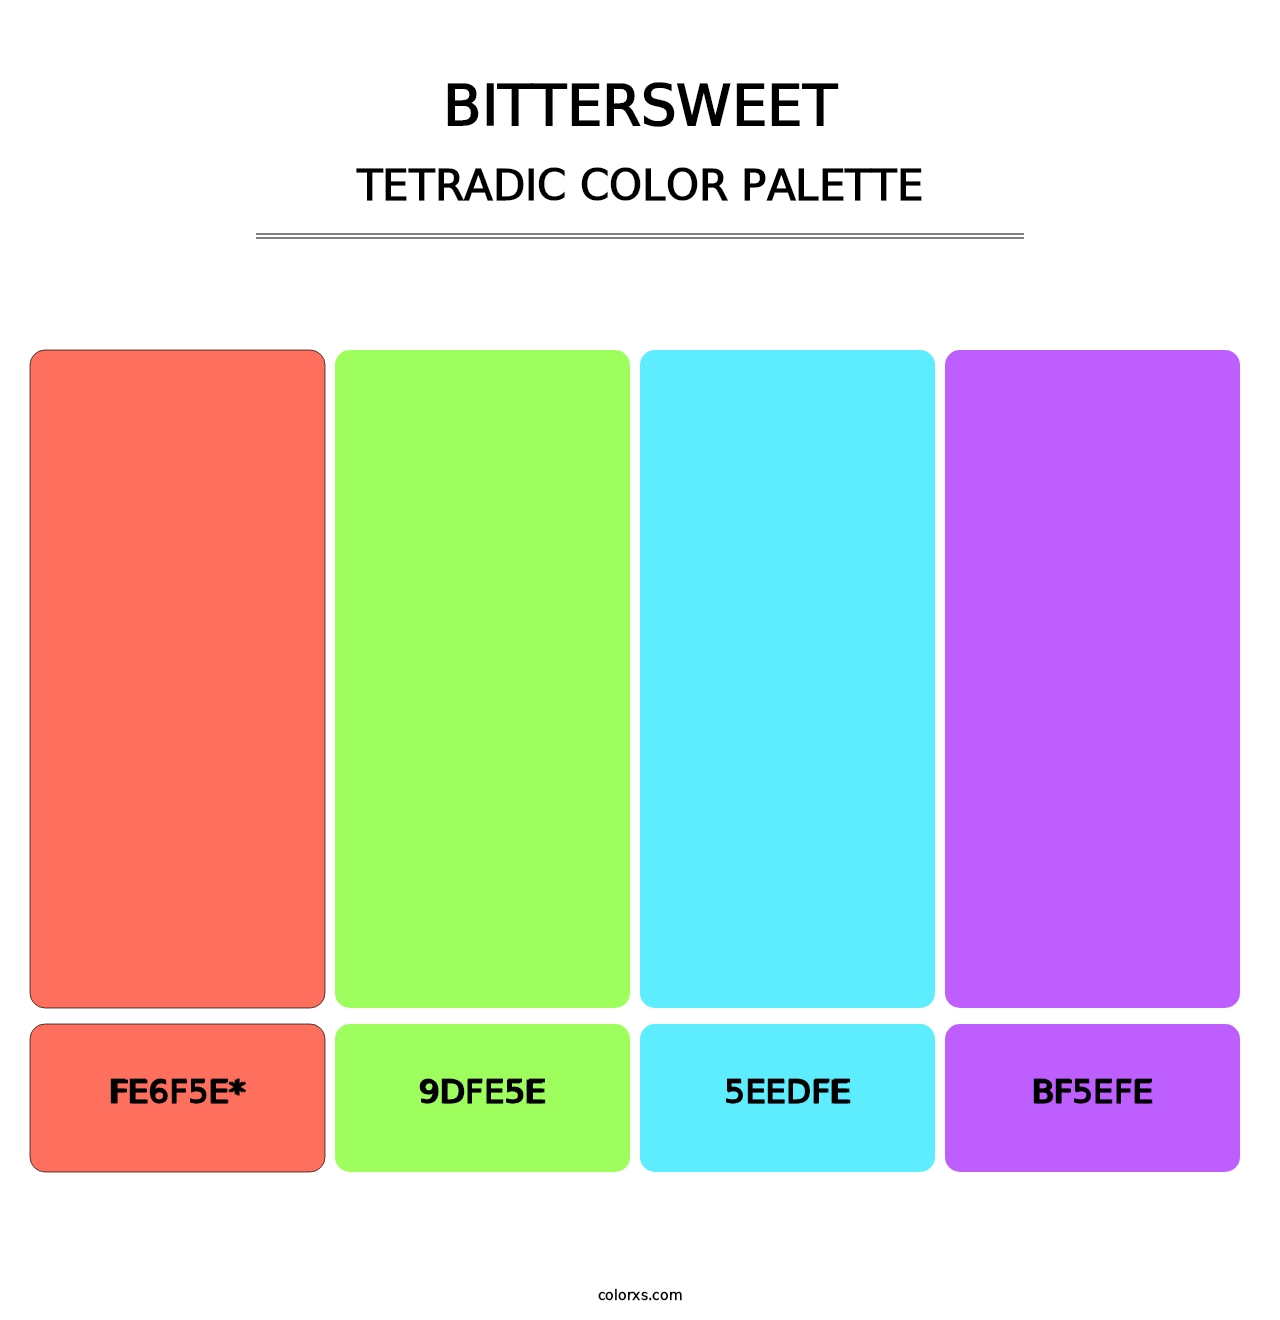 Bittersweet - Tetradic Color Palette